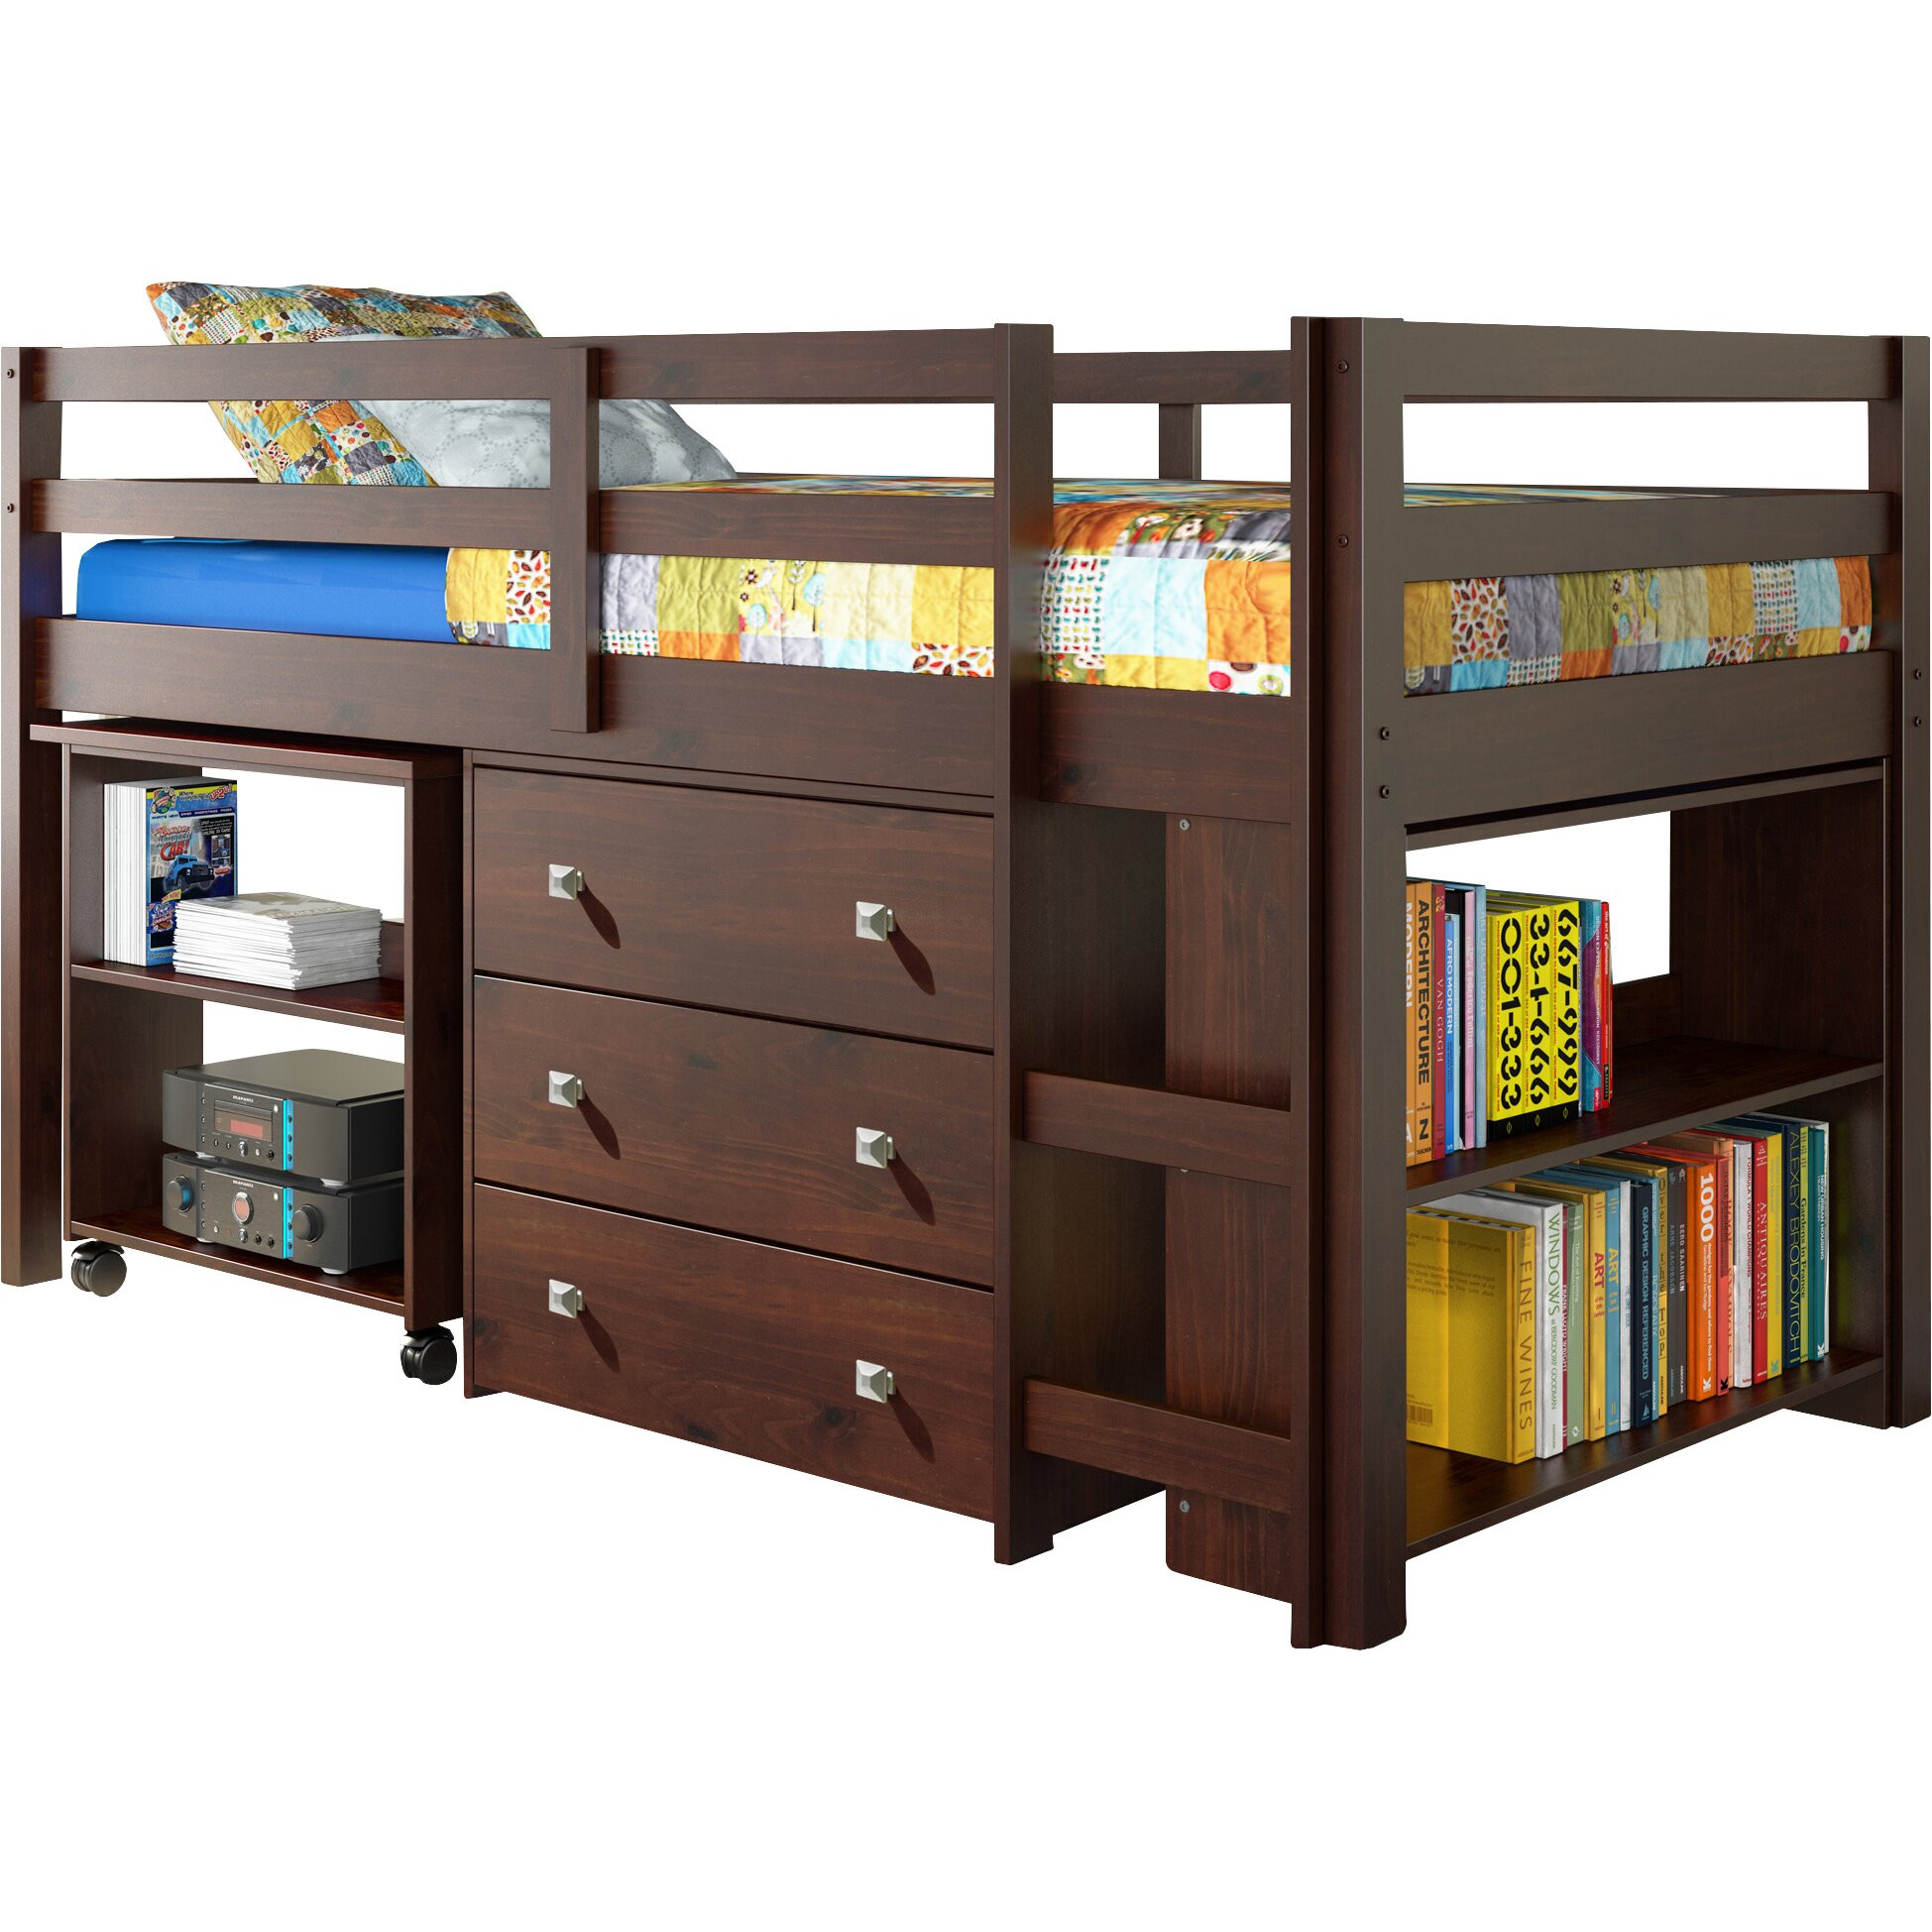 Kids Loft Bed With Storage
 Donco Kids Twin Low Loft Bed with Storage & Reviews